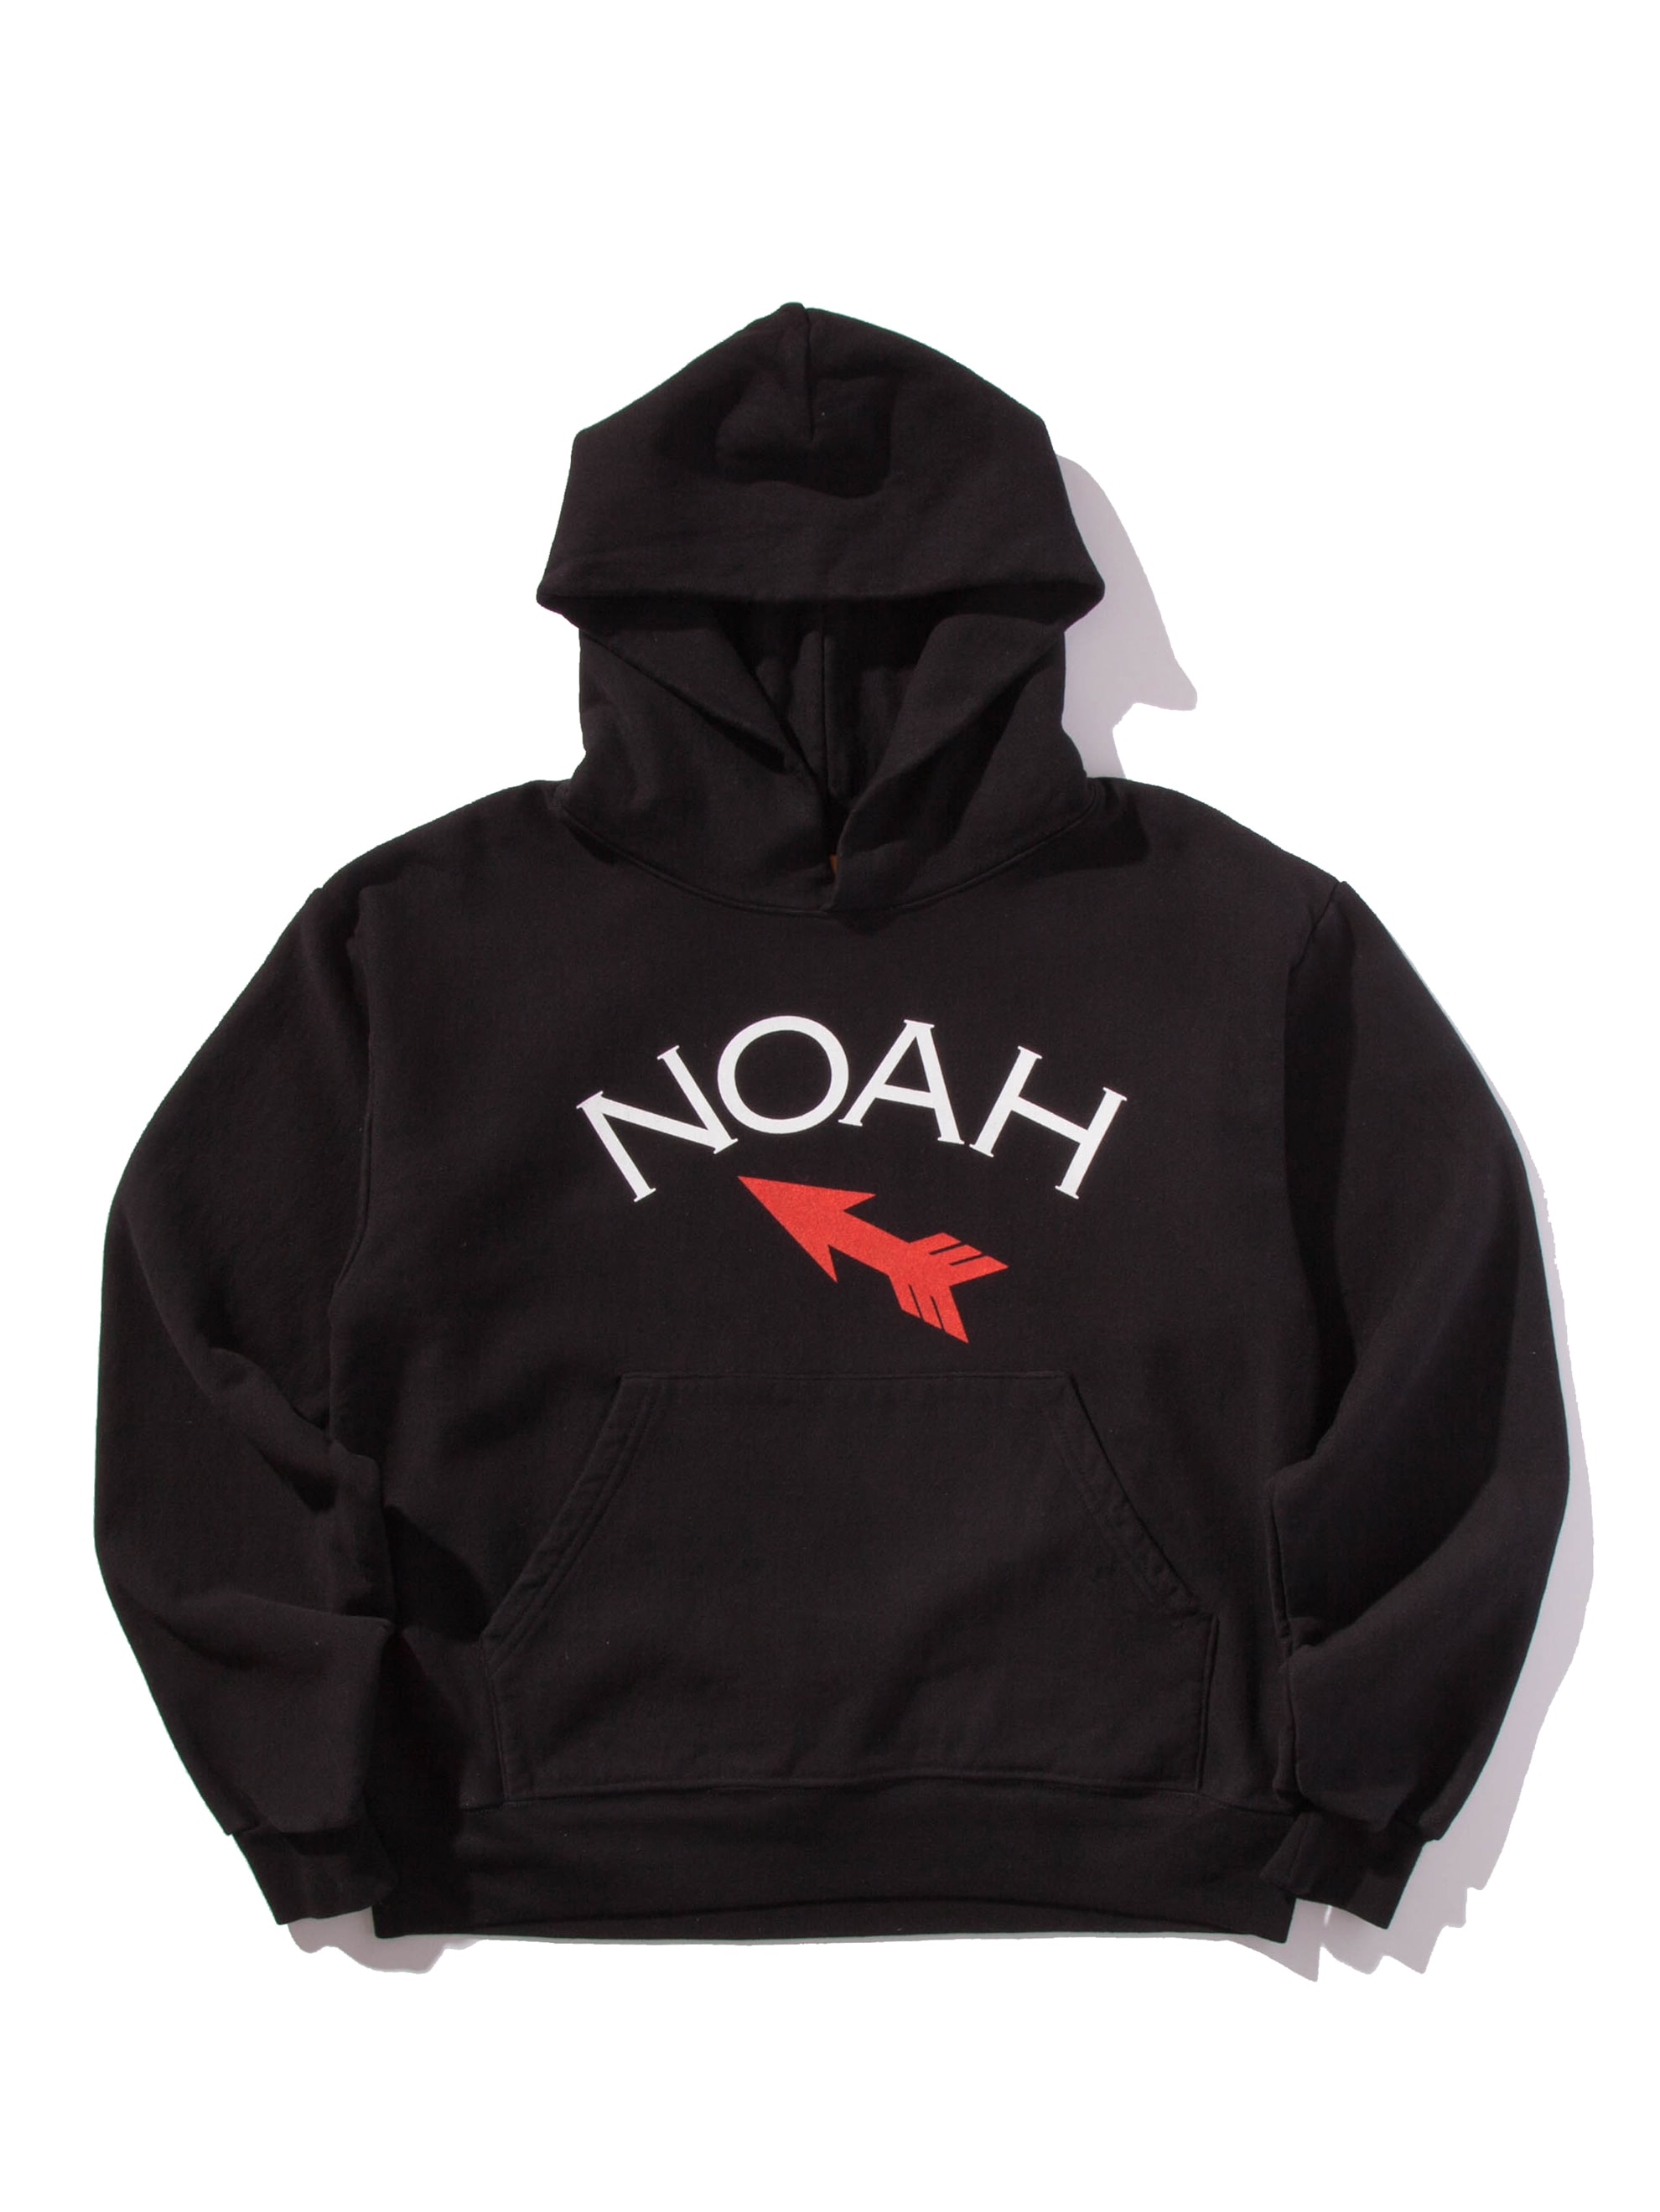 Noah x ComplexCon hoodie